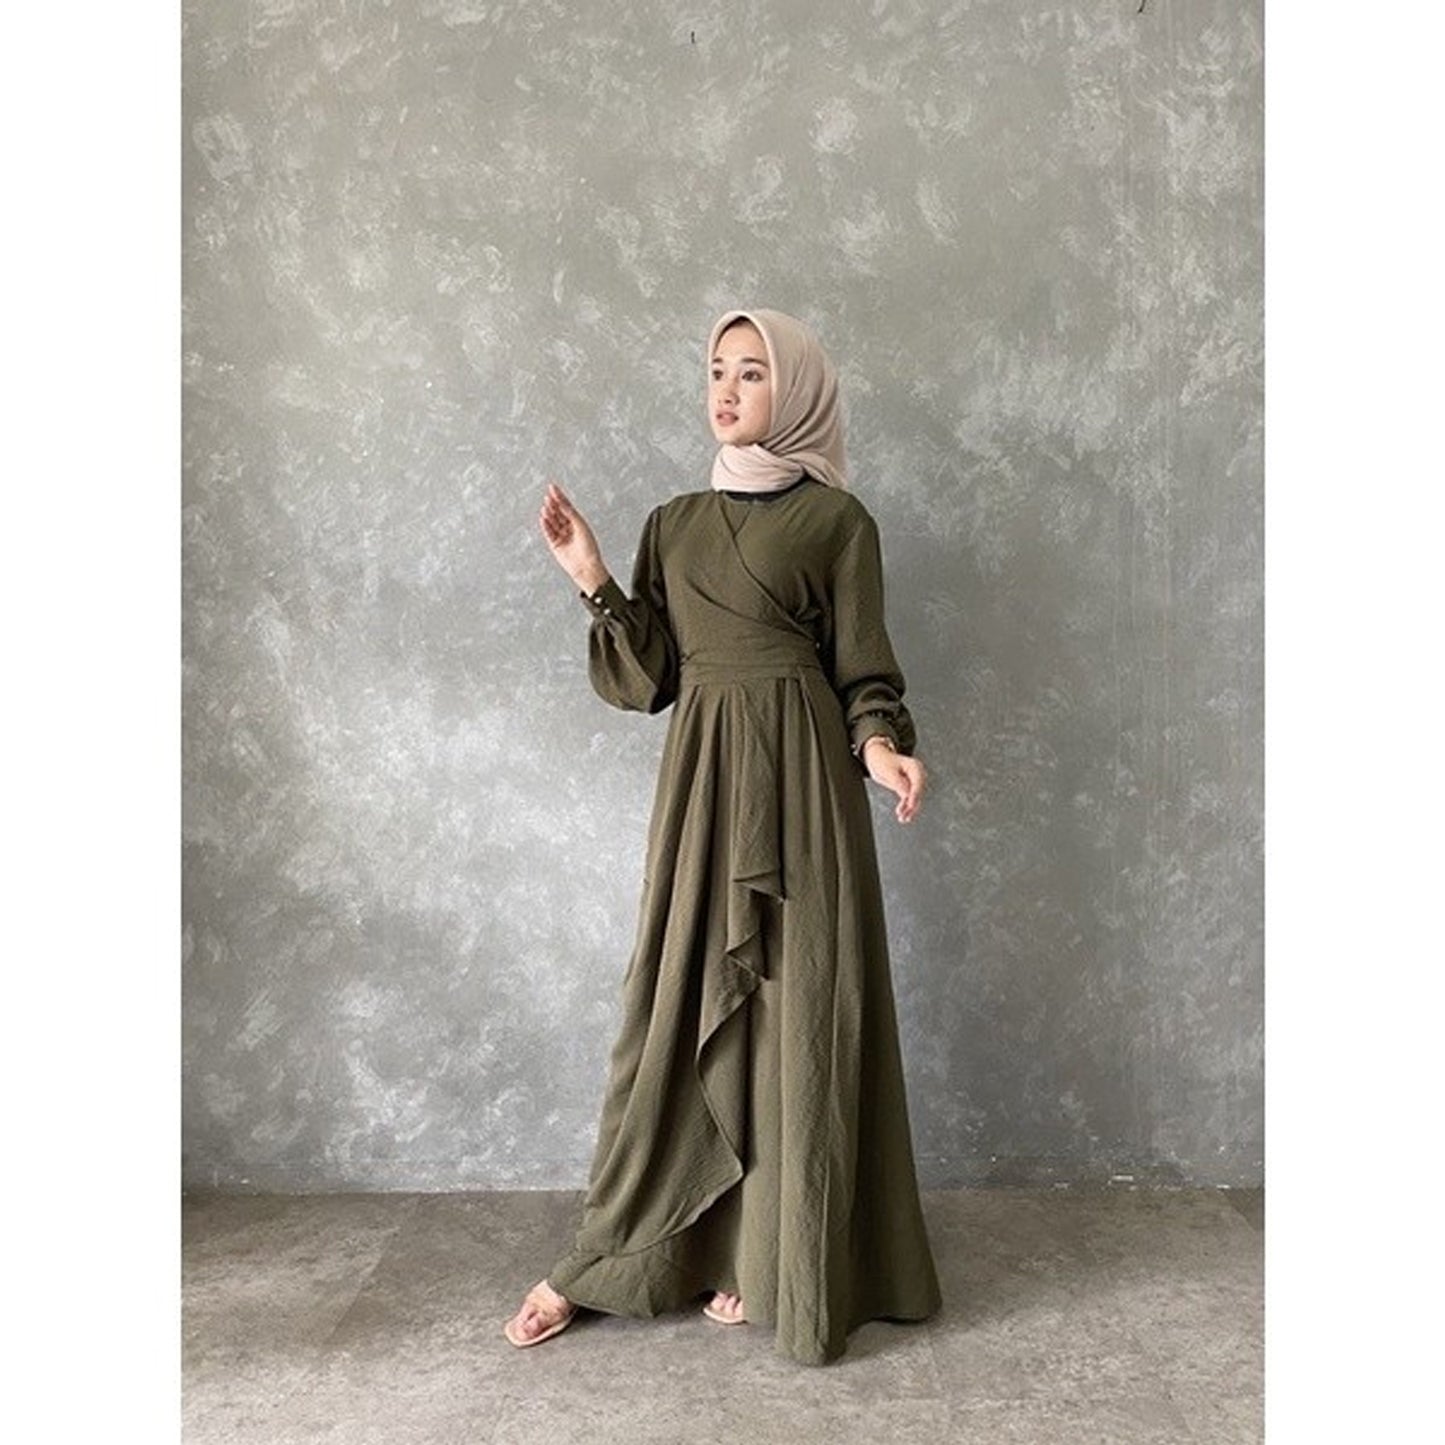 Sada Dress Jumbo: Embrace Modesty with the Muslim Fashion Trends, Islamic Dress, Khimar dress, Muslim Dress, Islamic Dress, Women Dress